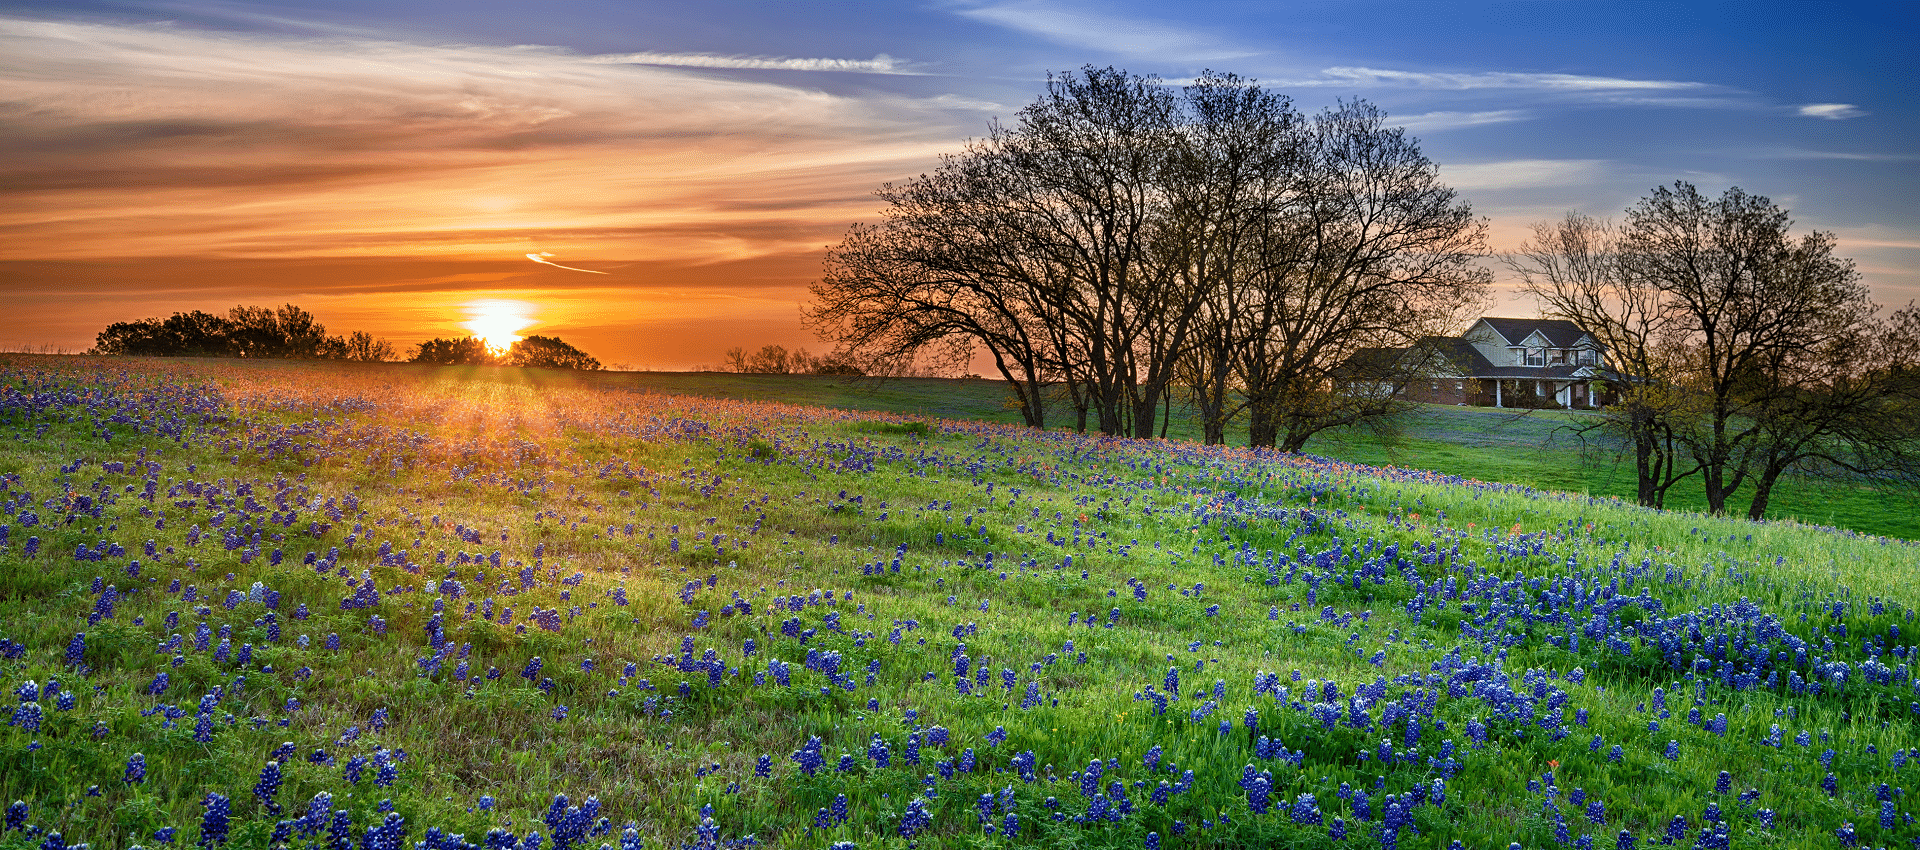 texas bluebonnet field at sunrise